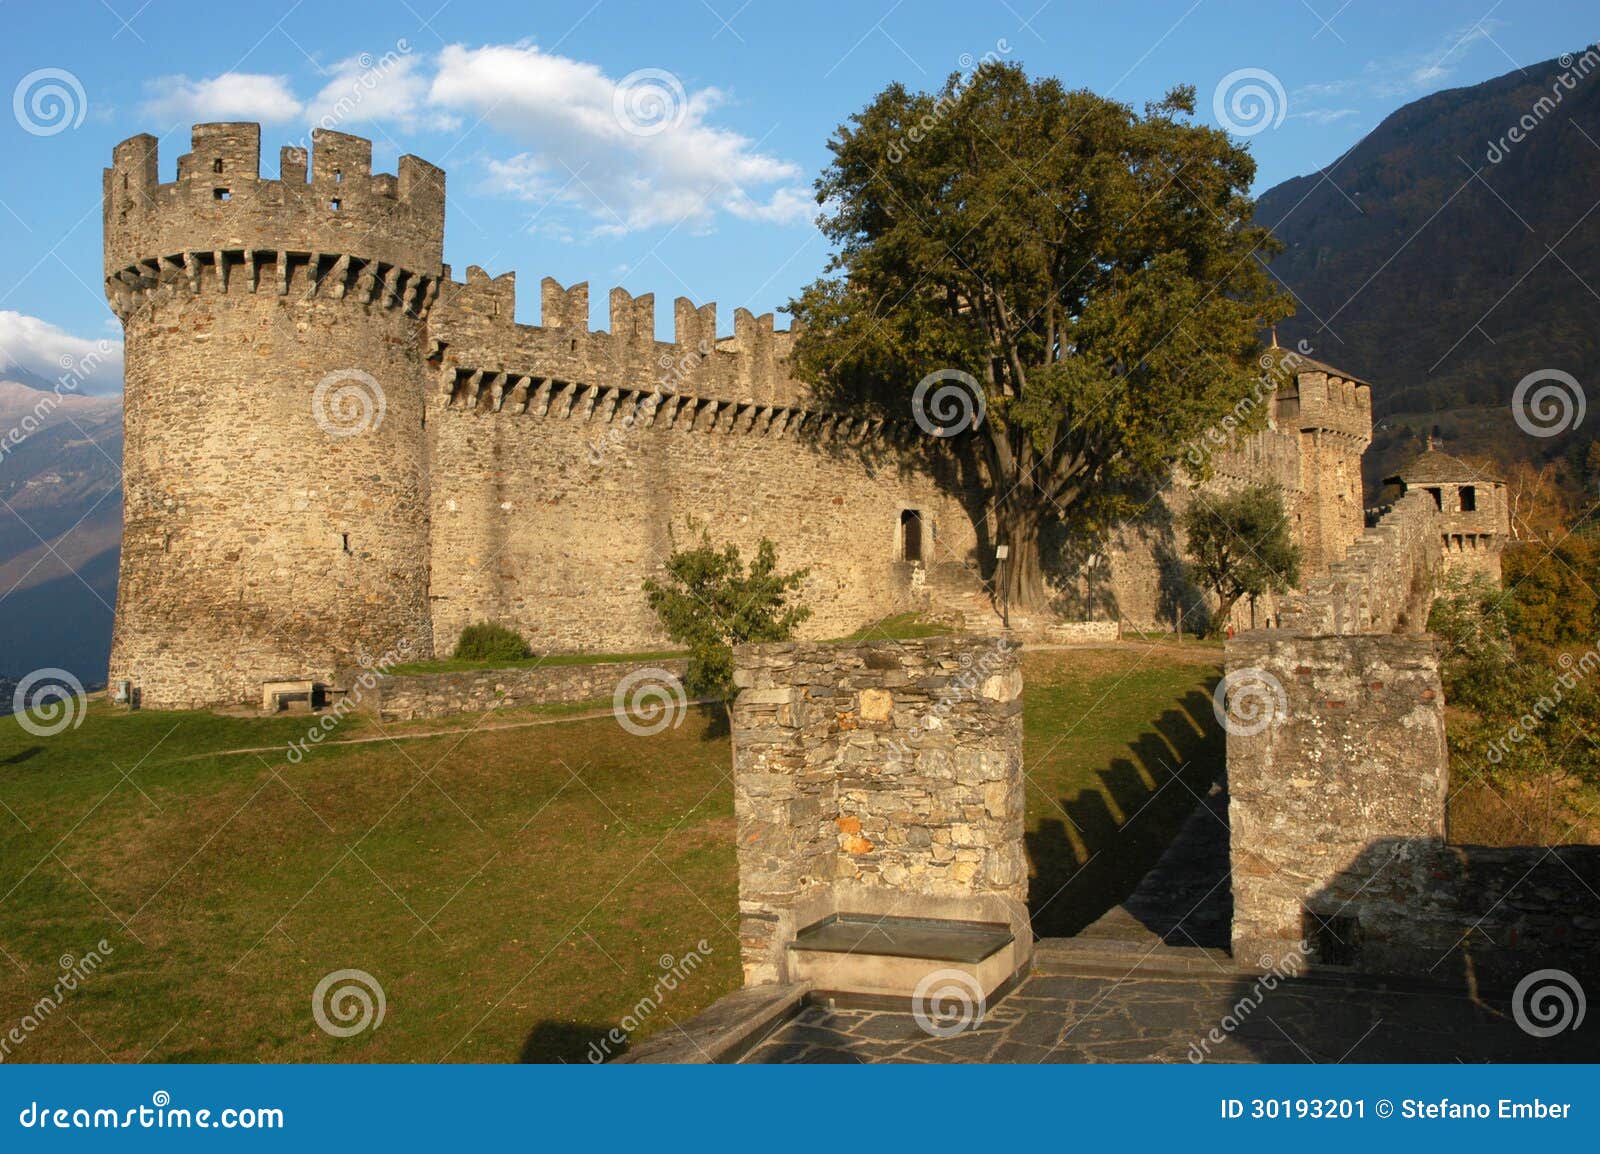 castle of montebello at bellinzona unesco world heritage